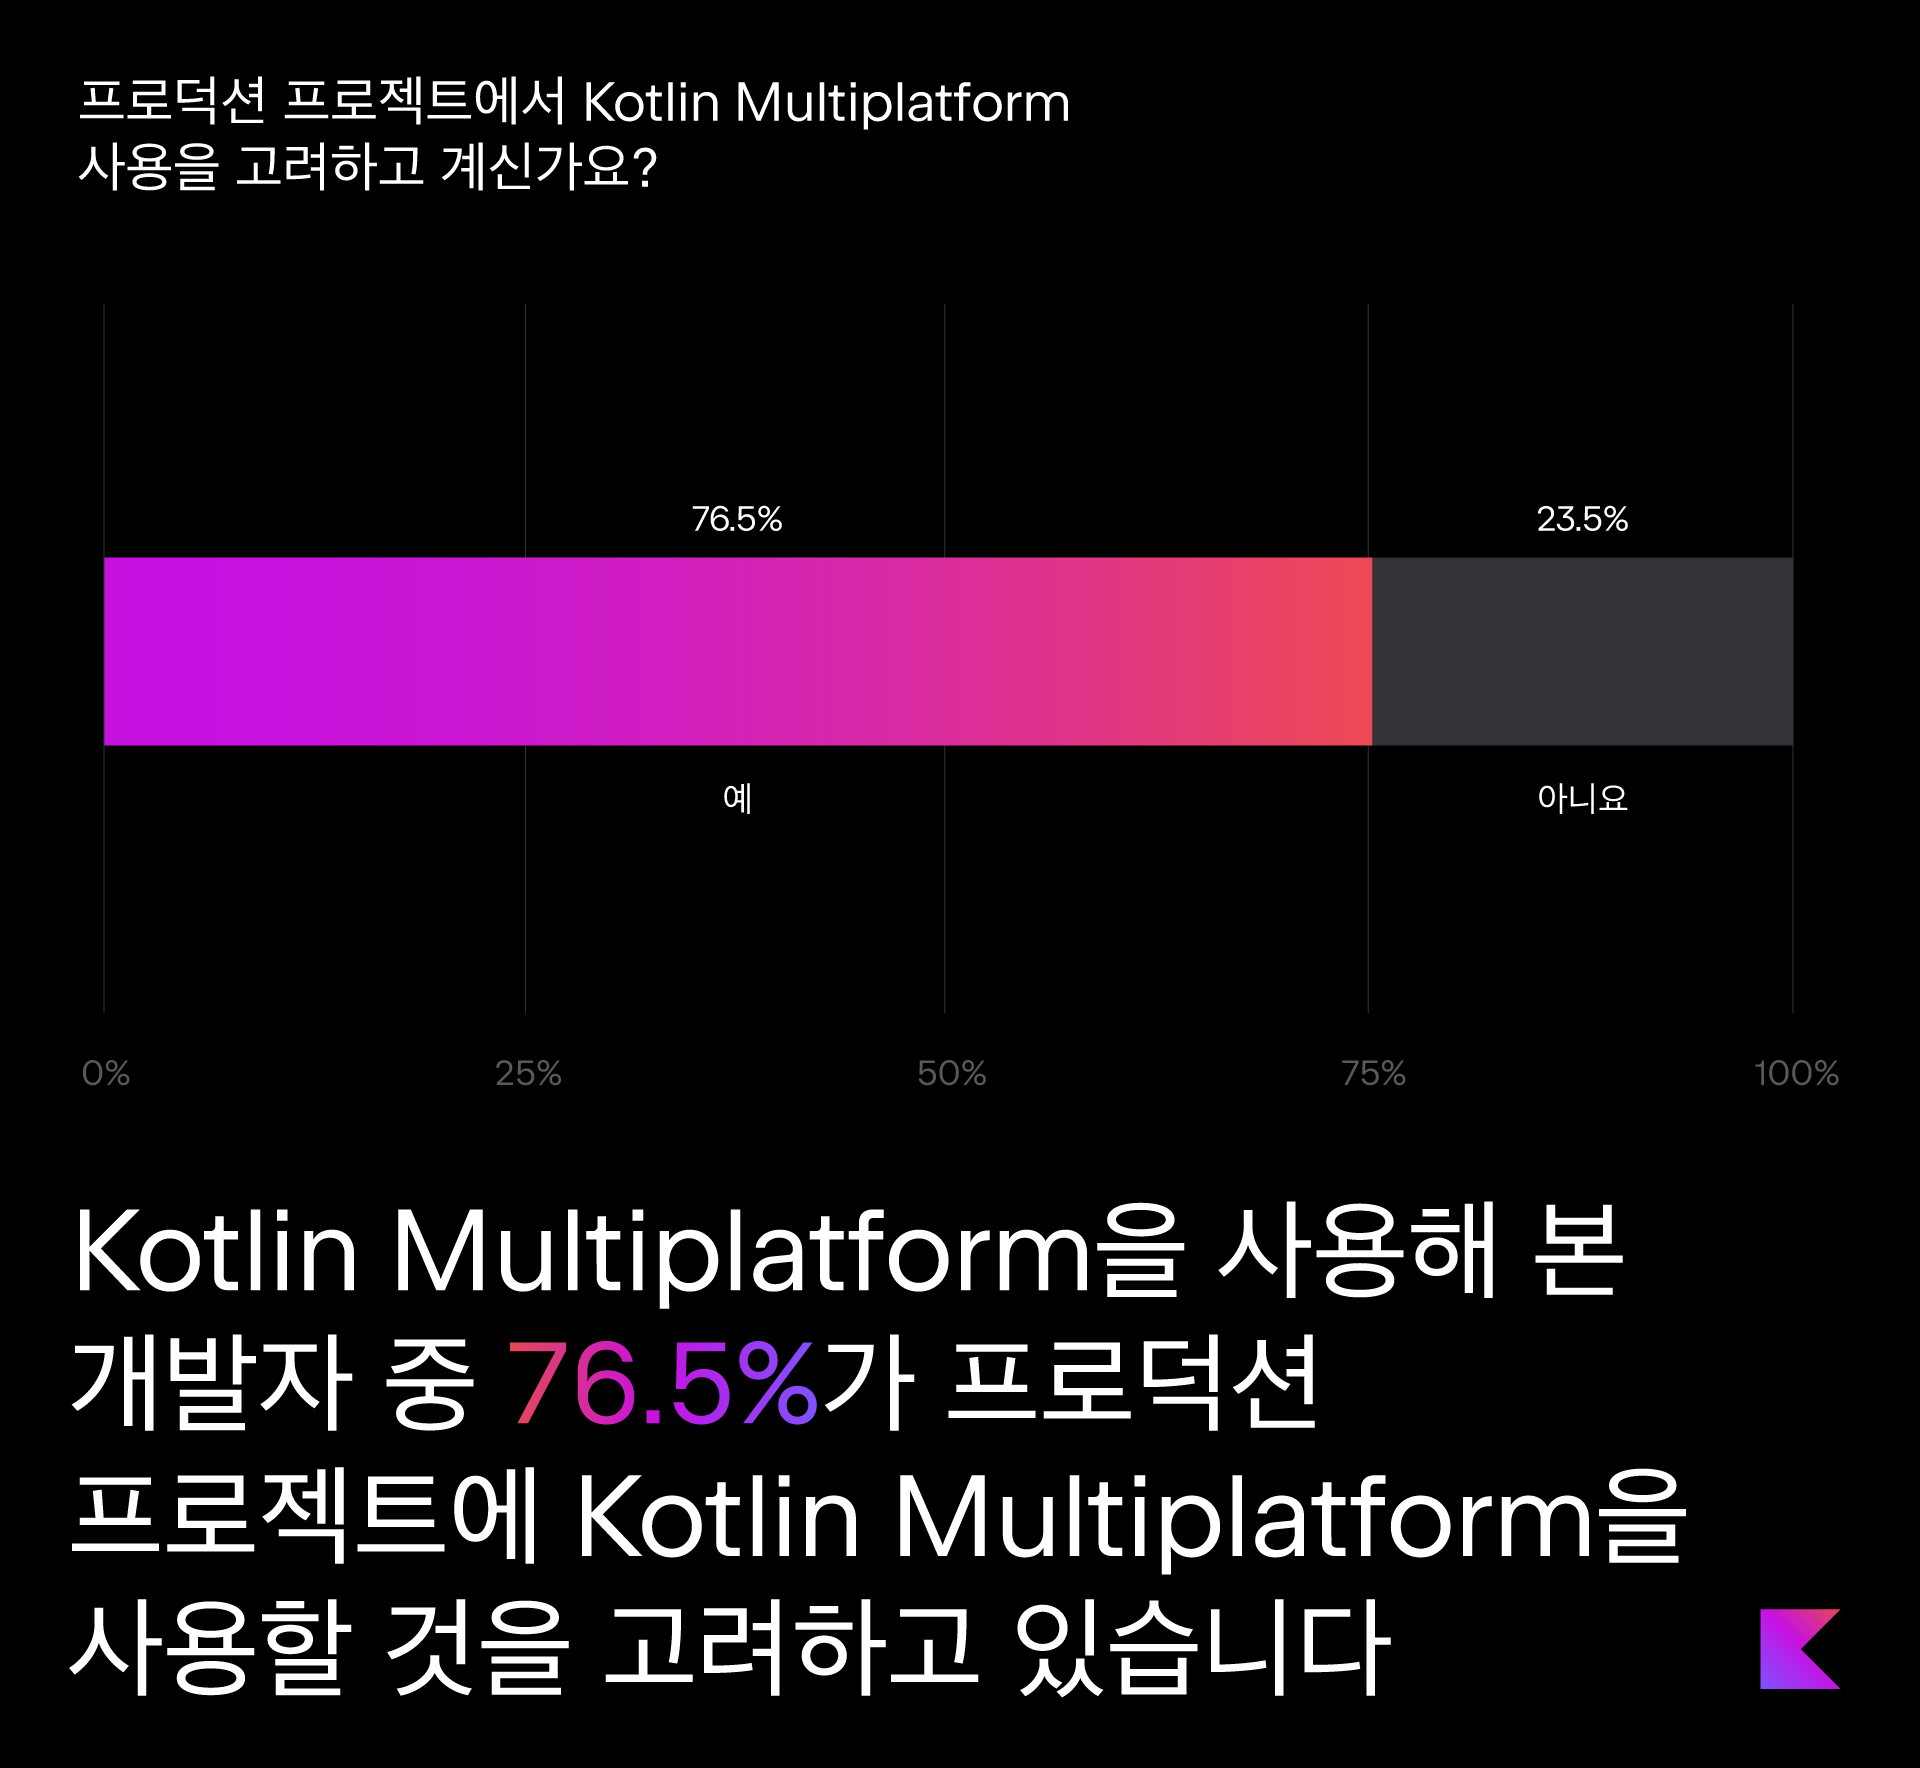 Kotlin Multiplatform을 사용해본 사람들 중 76.5%가 프로덕션 프로젝트에 Kotlin Multiplatform을 사용해보려고 고려하고 있습니다.